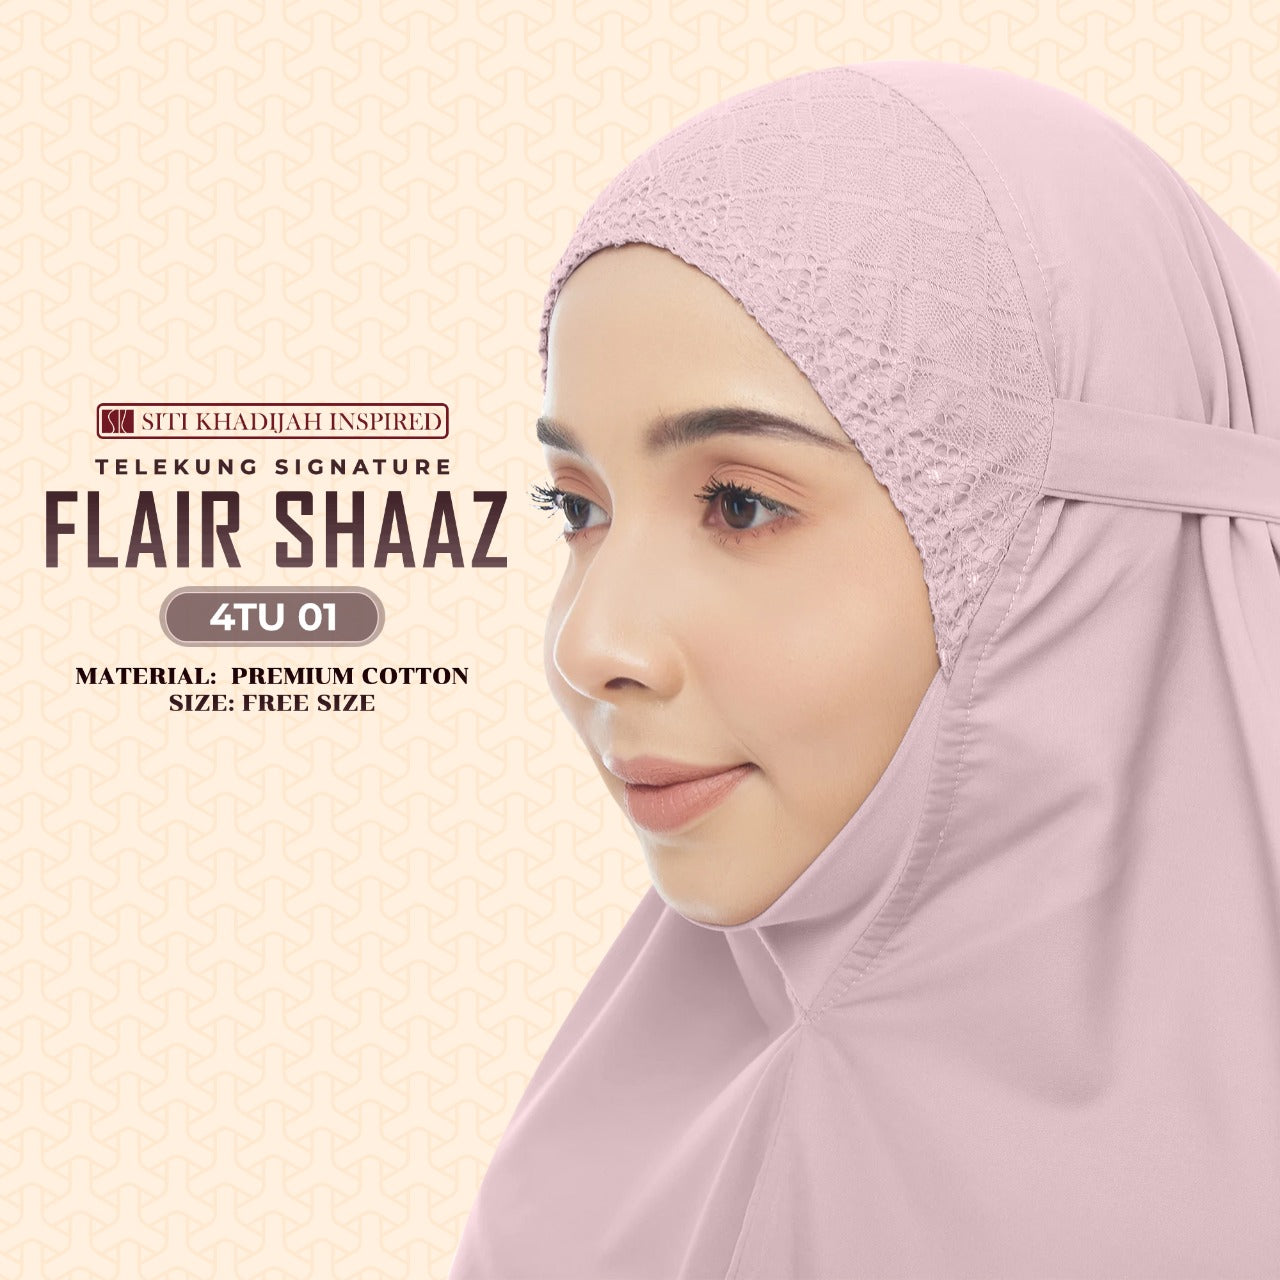 Telekung Siti Khadijah Inspired Signature Flair Shaaz - FREE Woven bag